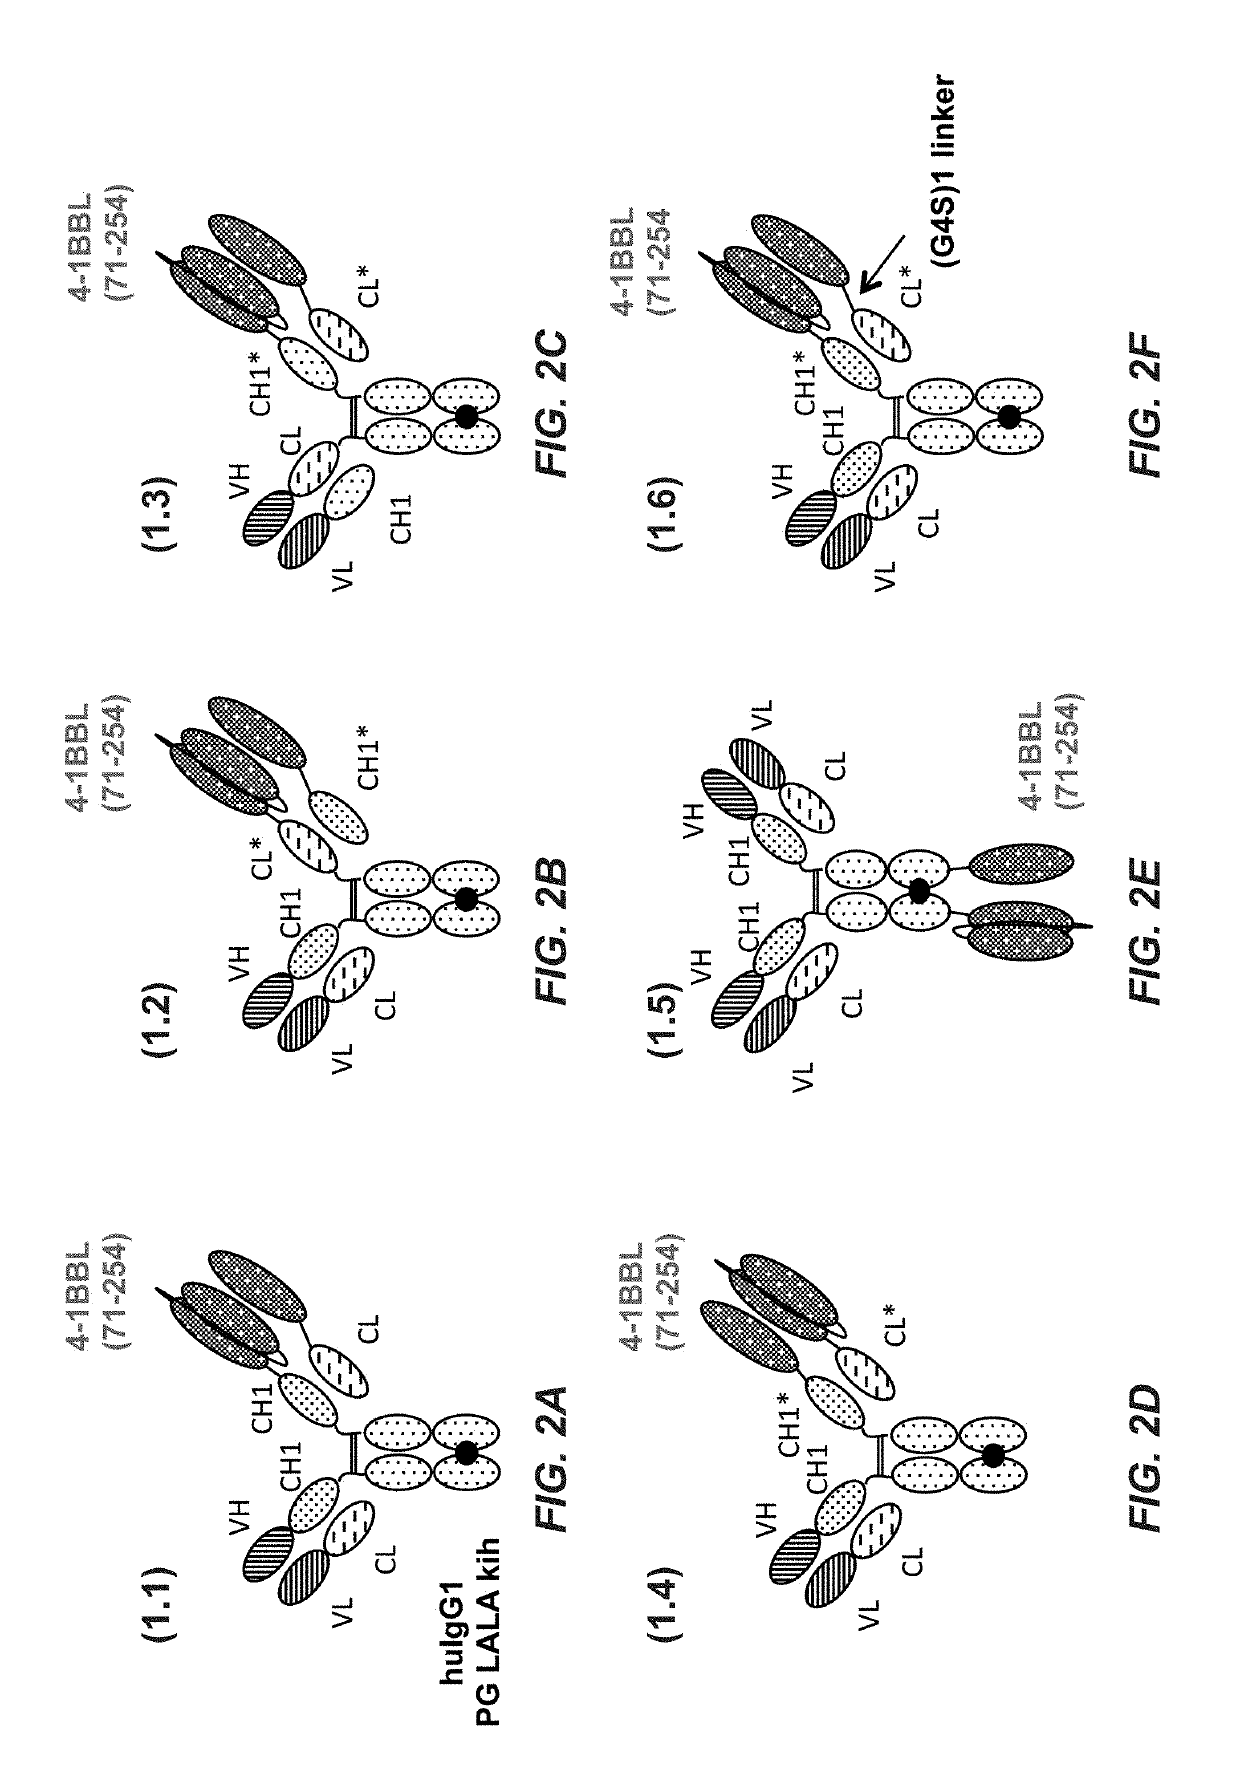 Tumor necrosis factor (TNF) family ligand trimer-containing antigen-binding molecules